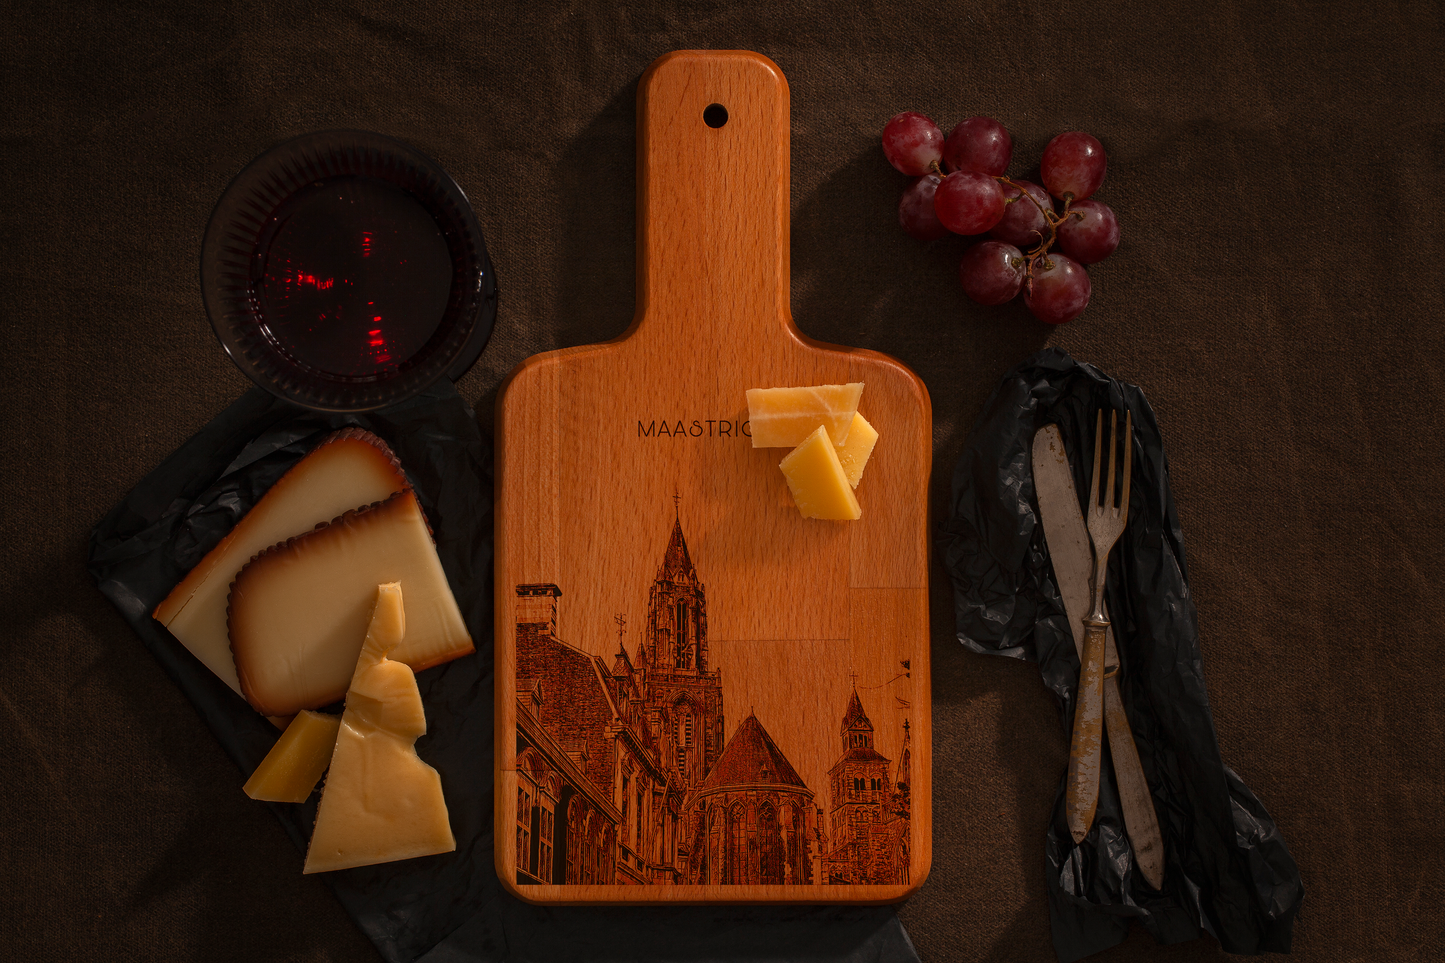 Maastricht, Sint-Janskerk, cheese board, with cheese